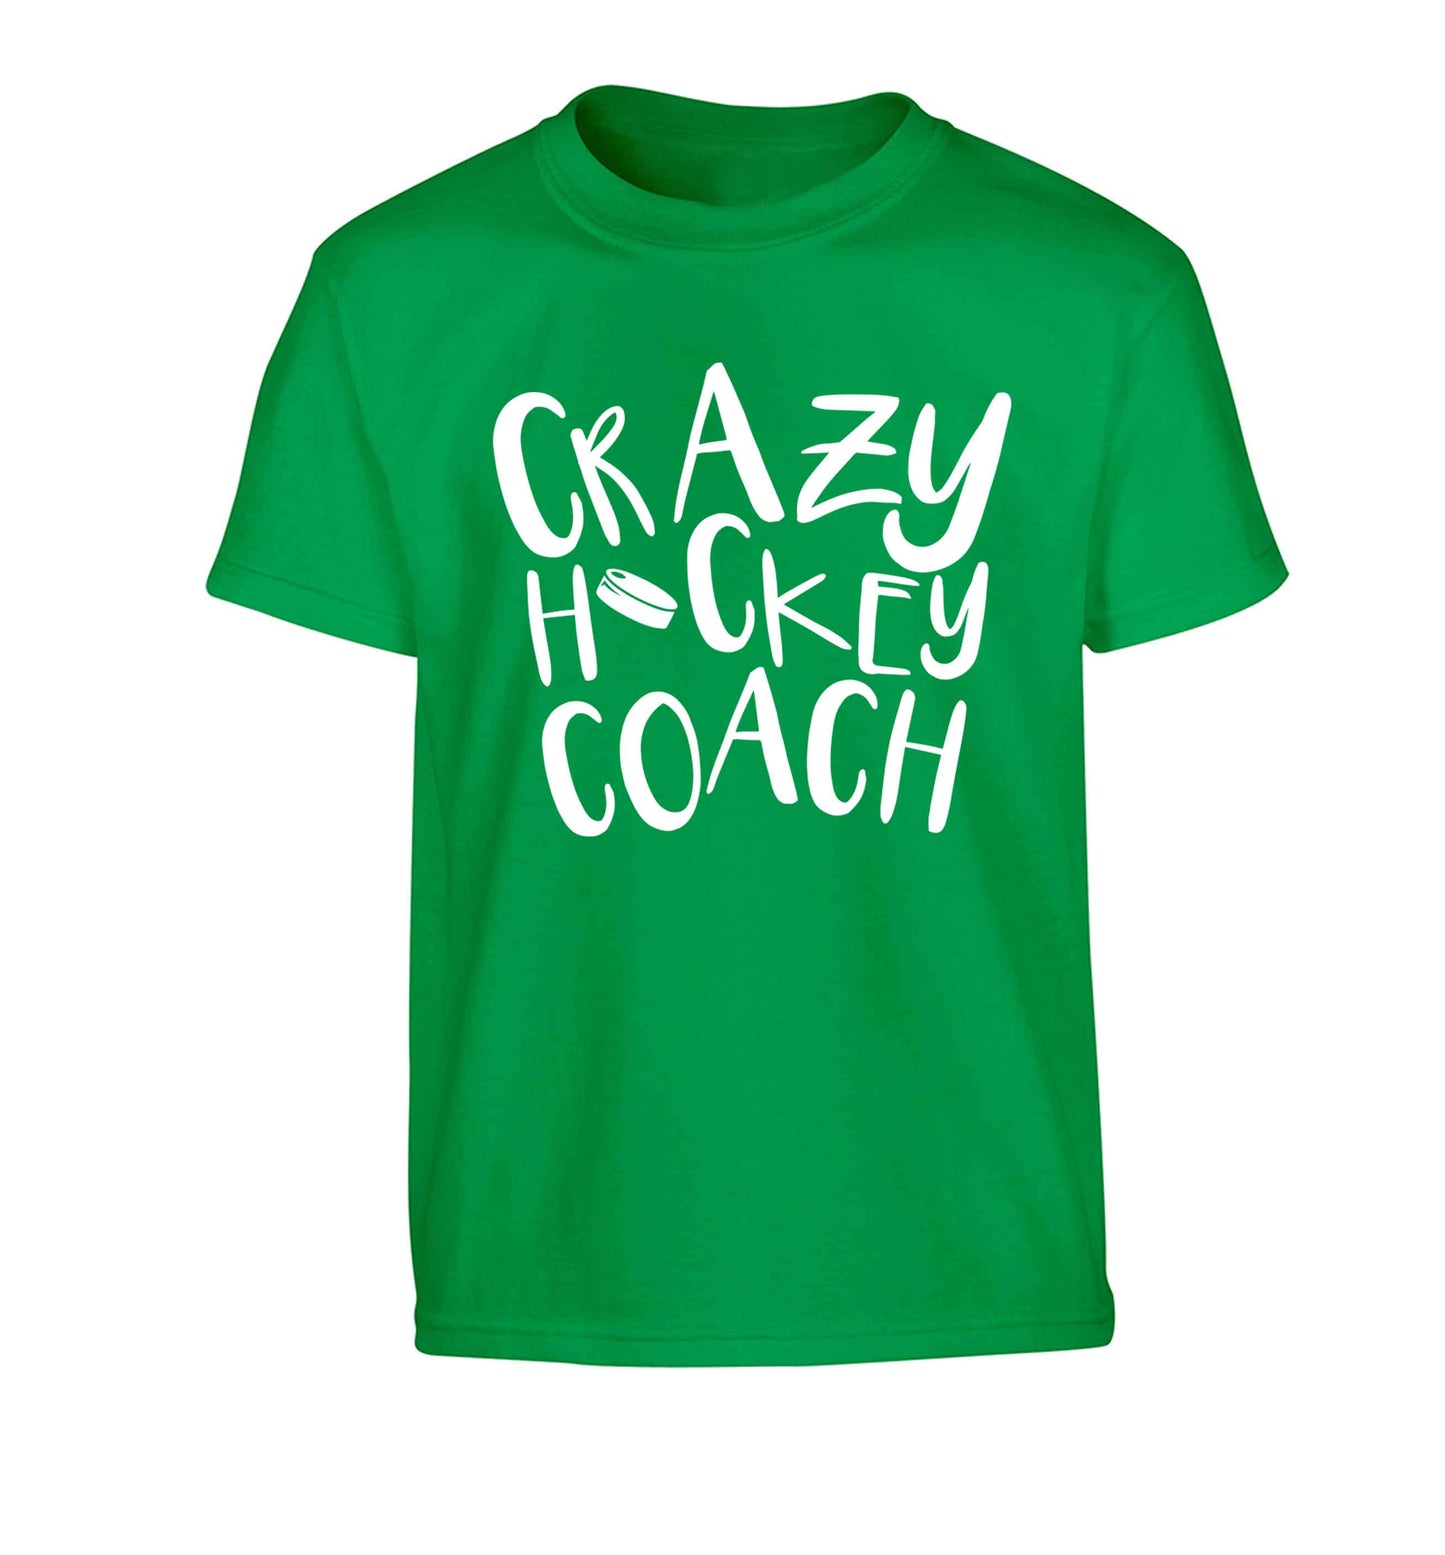 Crazy hockey coach Children's green Tshirt 12-13 Years